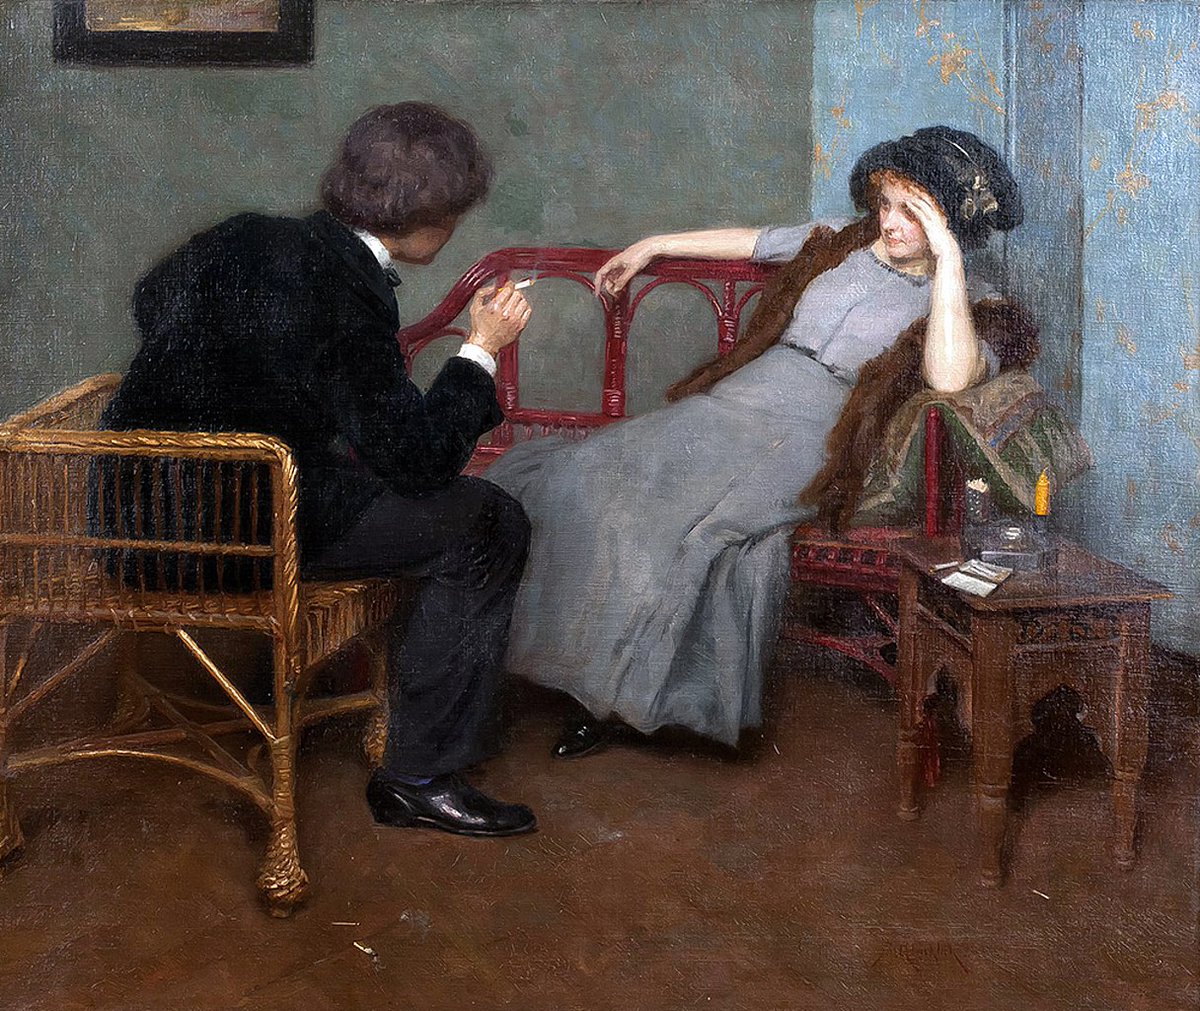 SIMON GLÜCKLICH (1863 - 1943), 'Couple in Conversation', 1880-90. Private collection. #SimonGlucklich #CoupleInConversation #ManSplainingMeme #gray #artoftheday #art instagram.com/p/C7efXKBu_j_/